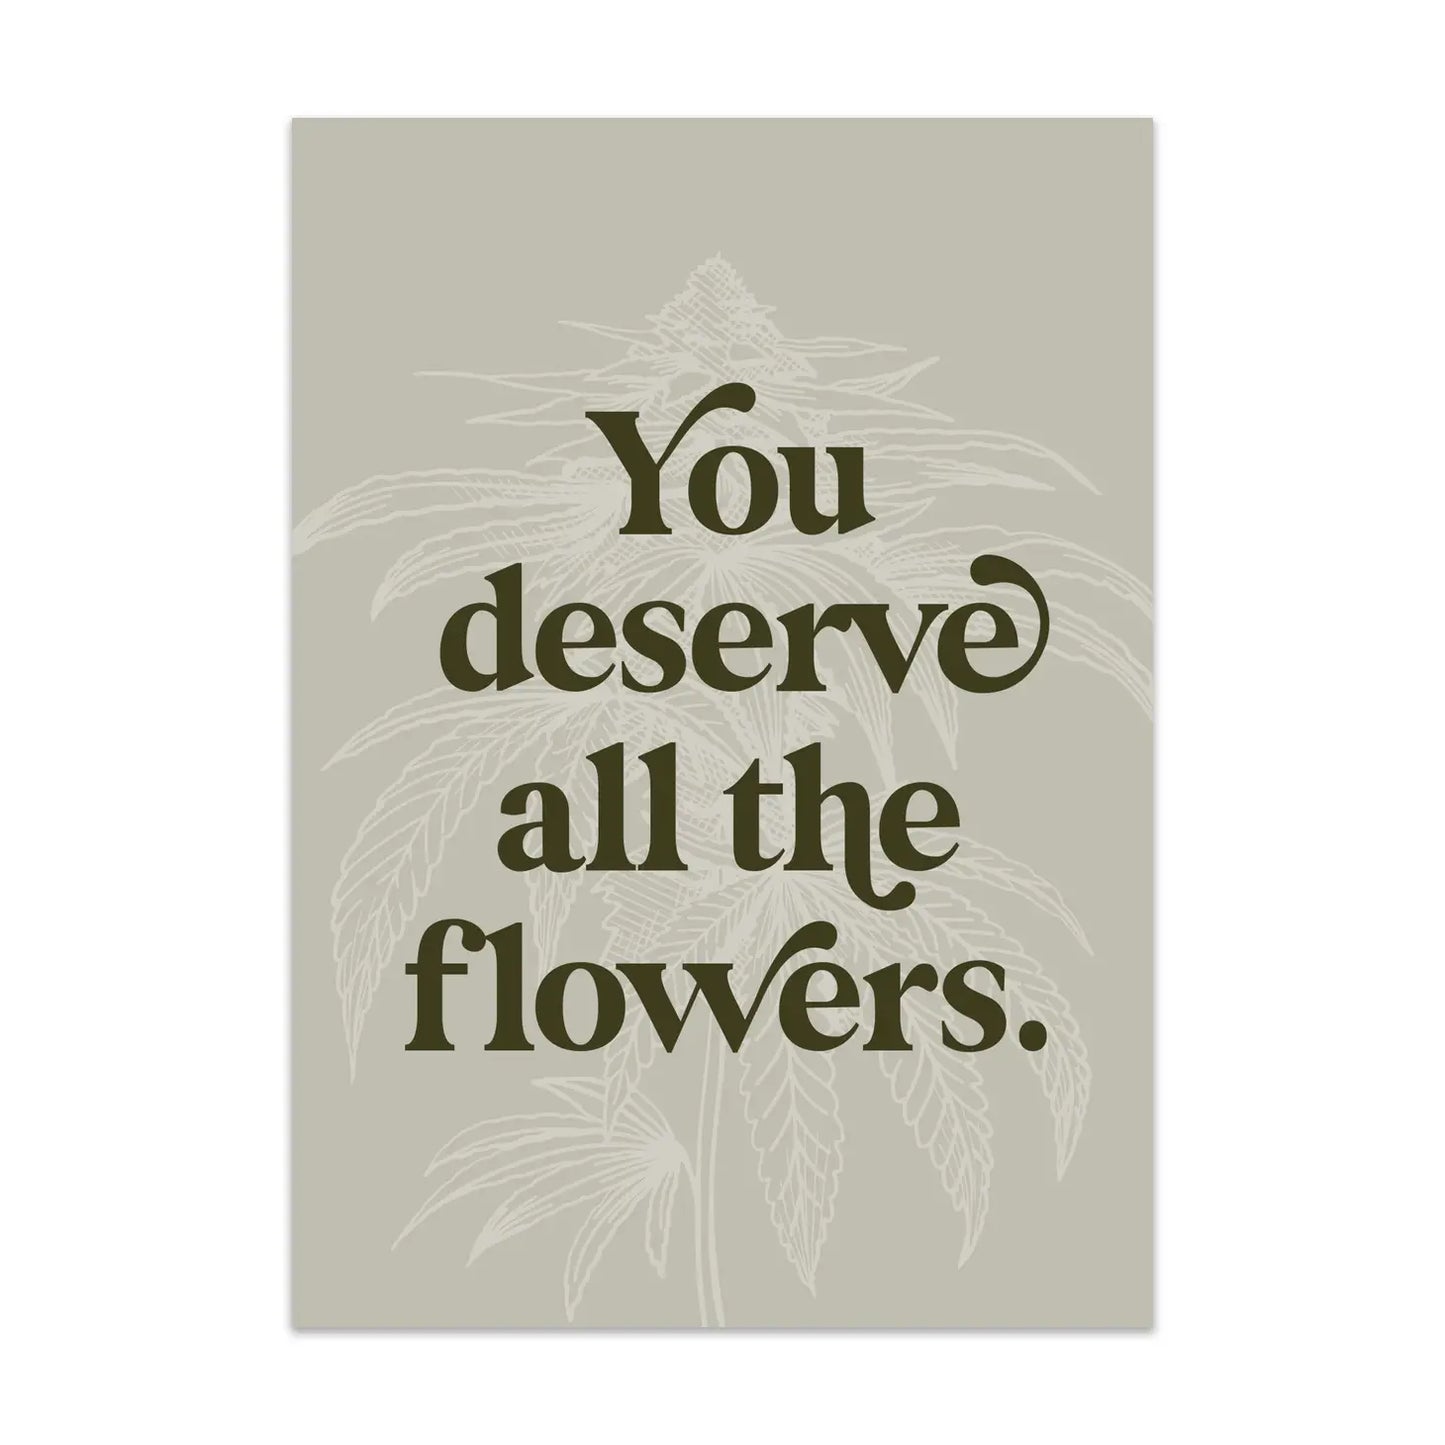 Deserve Flowers - Greeting Card